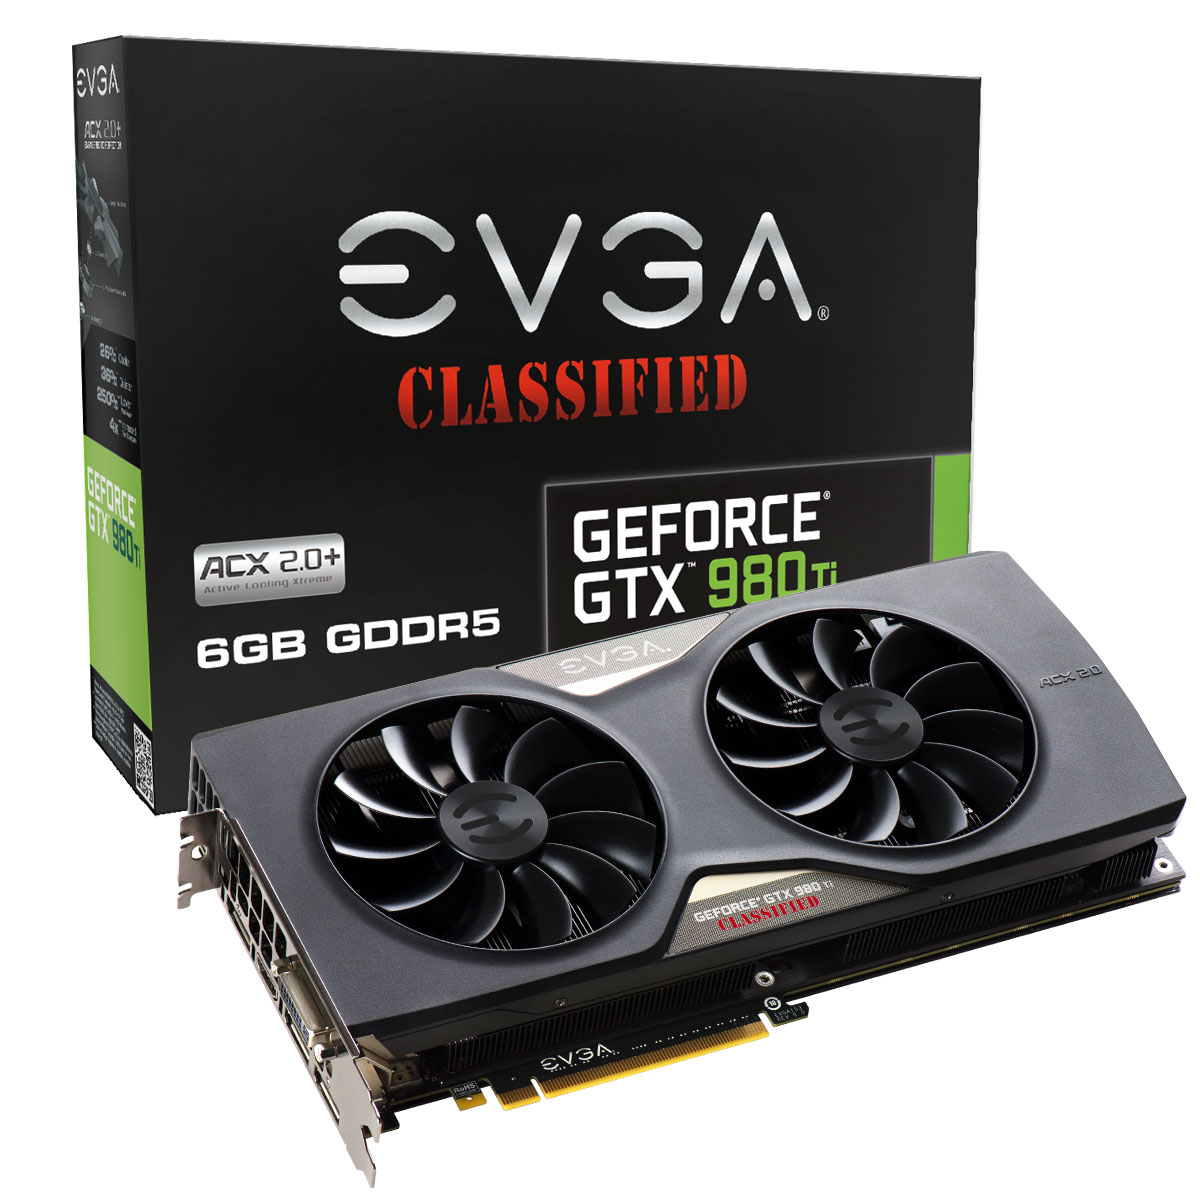 EVGA GeForce GTX 980 Ti Classified ACX 2.0+ announced 22